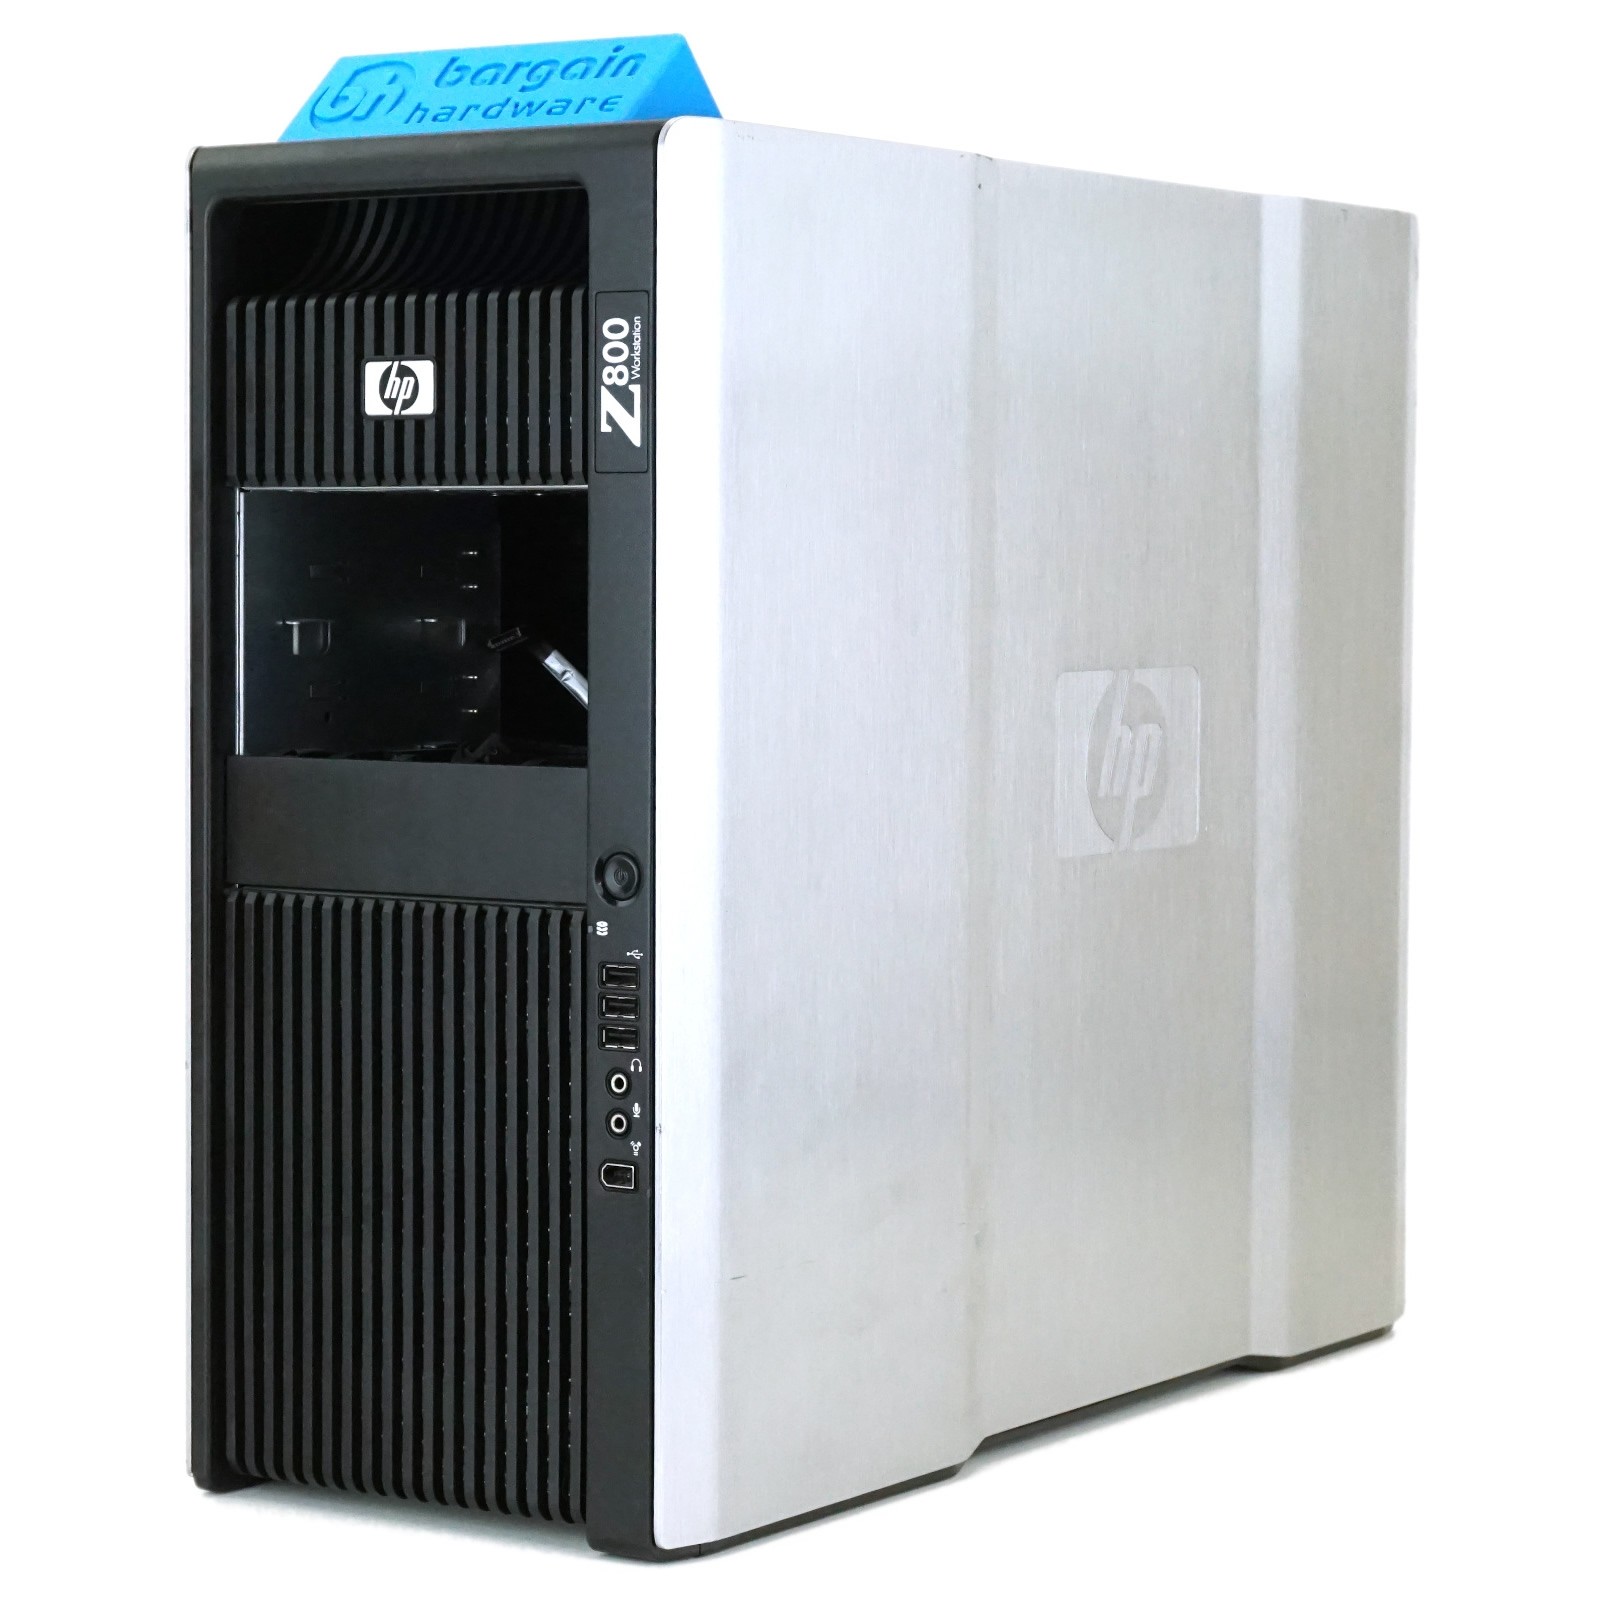 HP Z800 Xeon 56 Series Tower Workstation